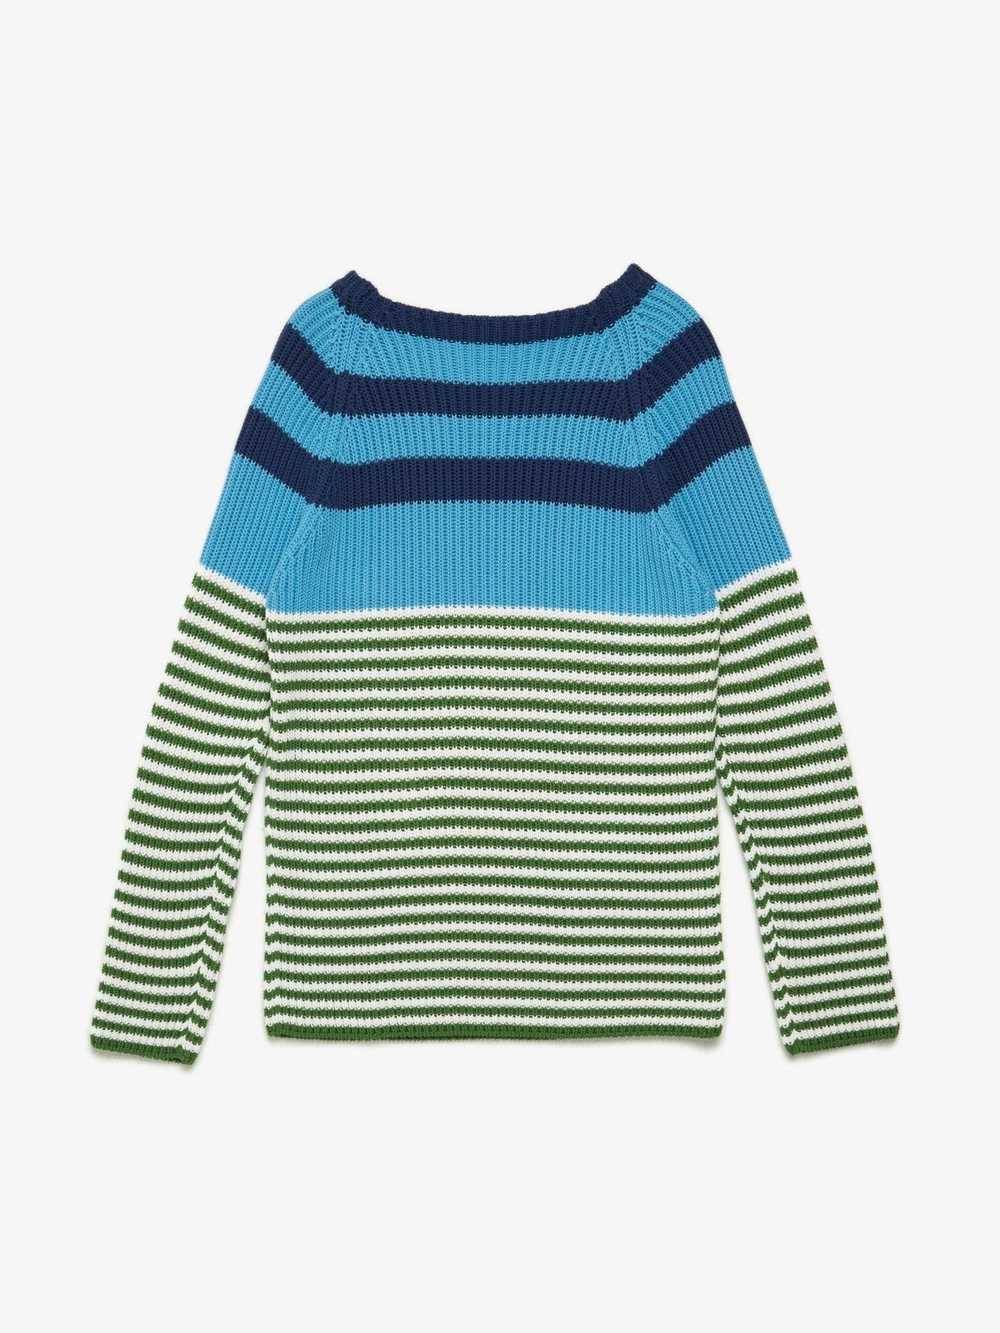 Prada Blue And Green Striped Cotton Sweater - image 2